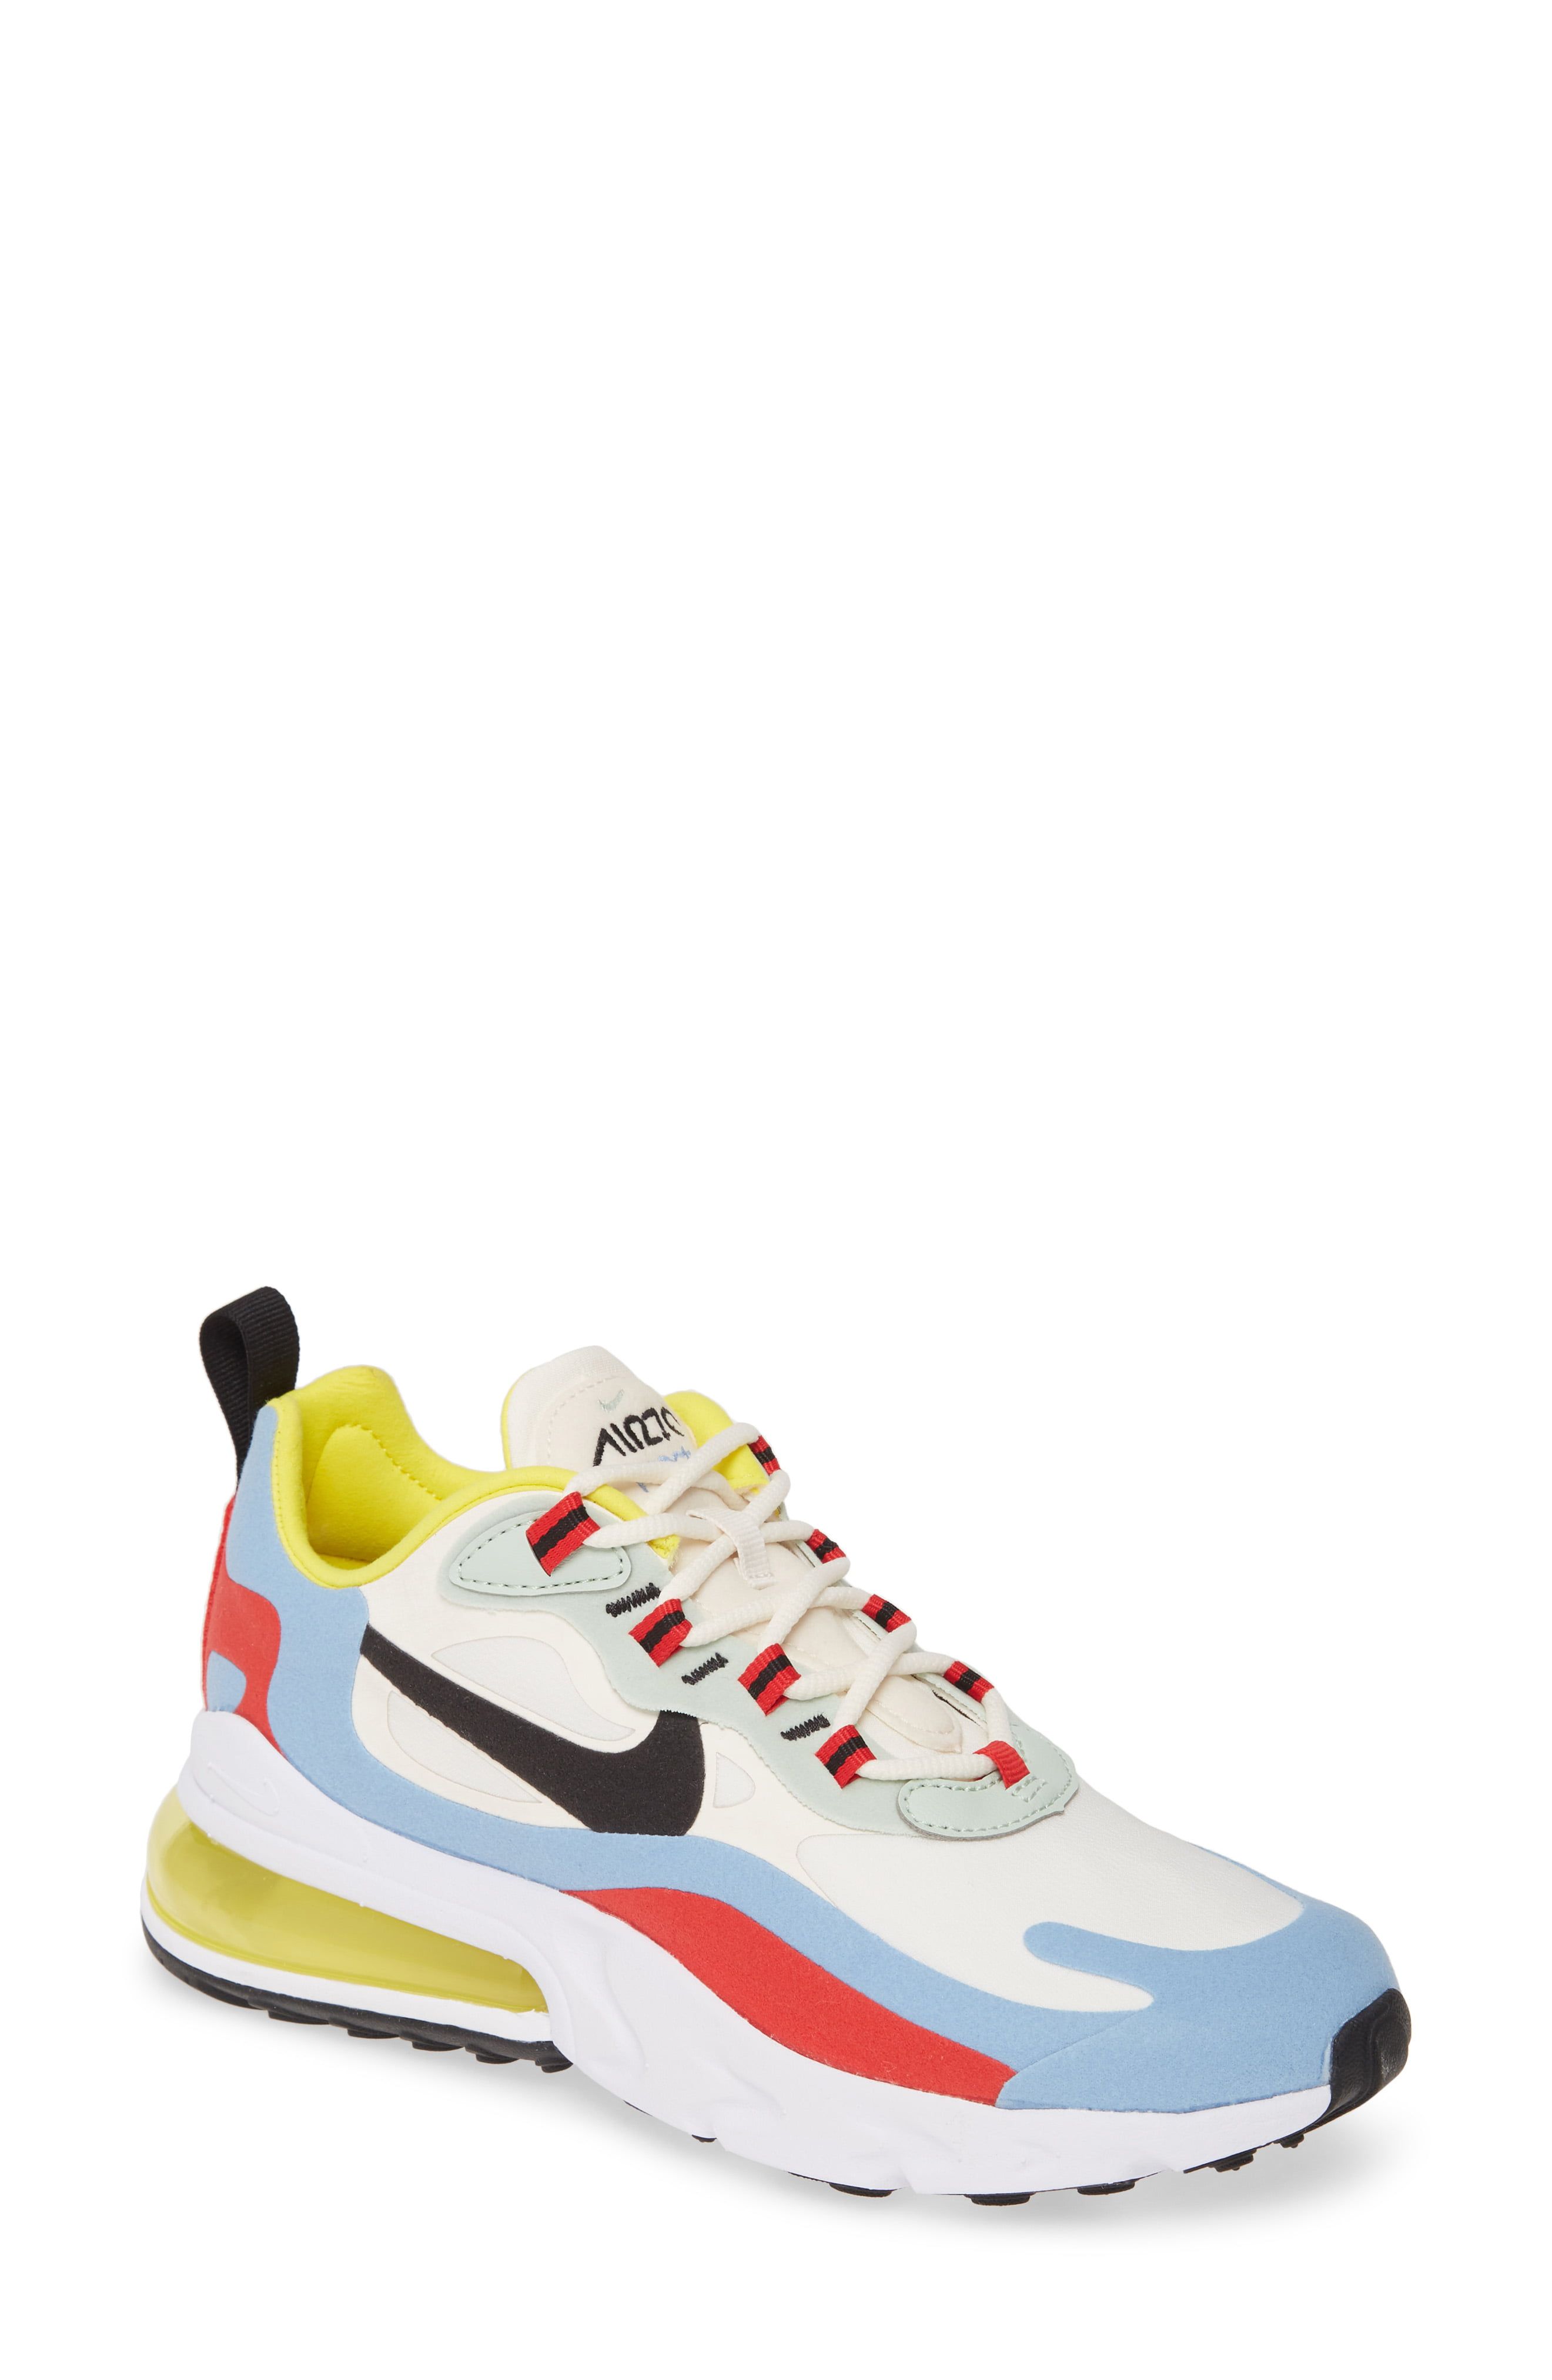 Air Max 270 React Sneaker